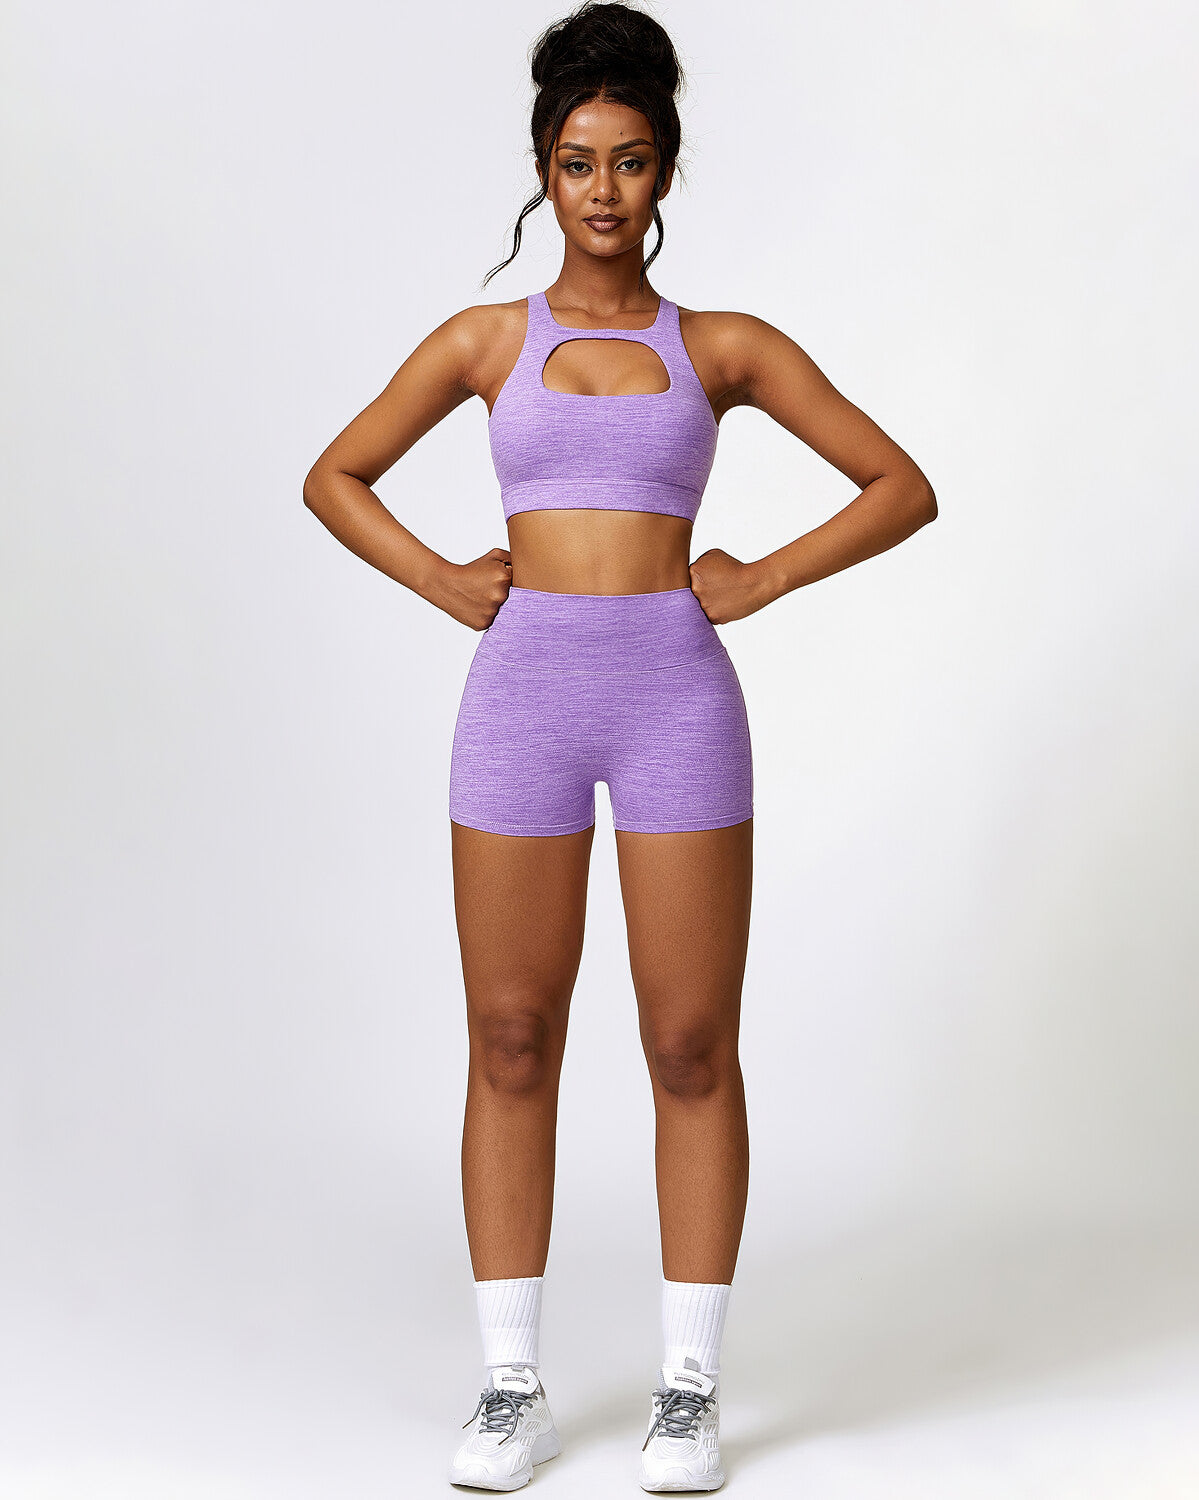 Jemma Seamless Pocket Shorts - Purple